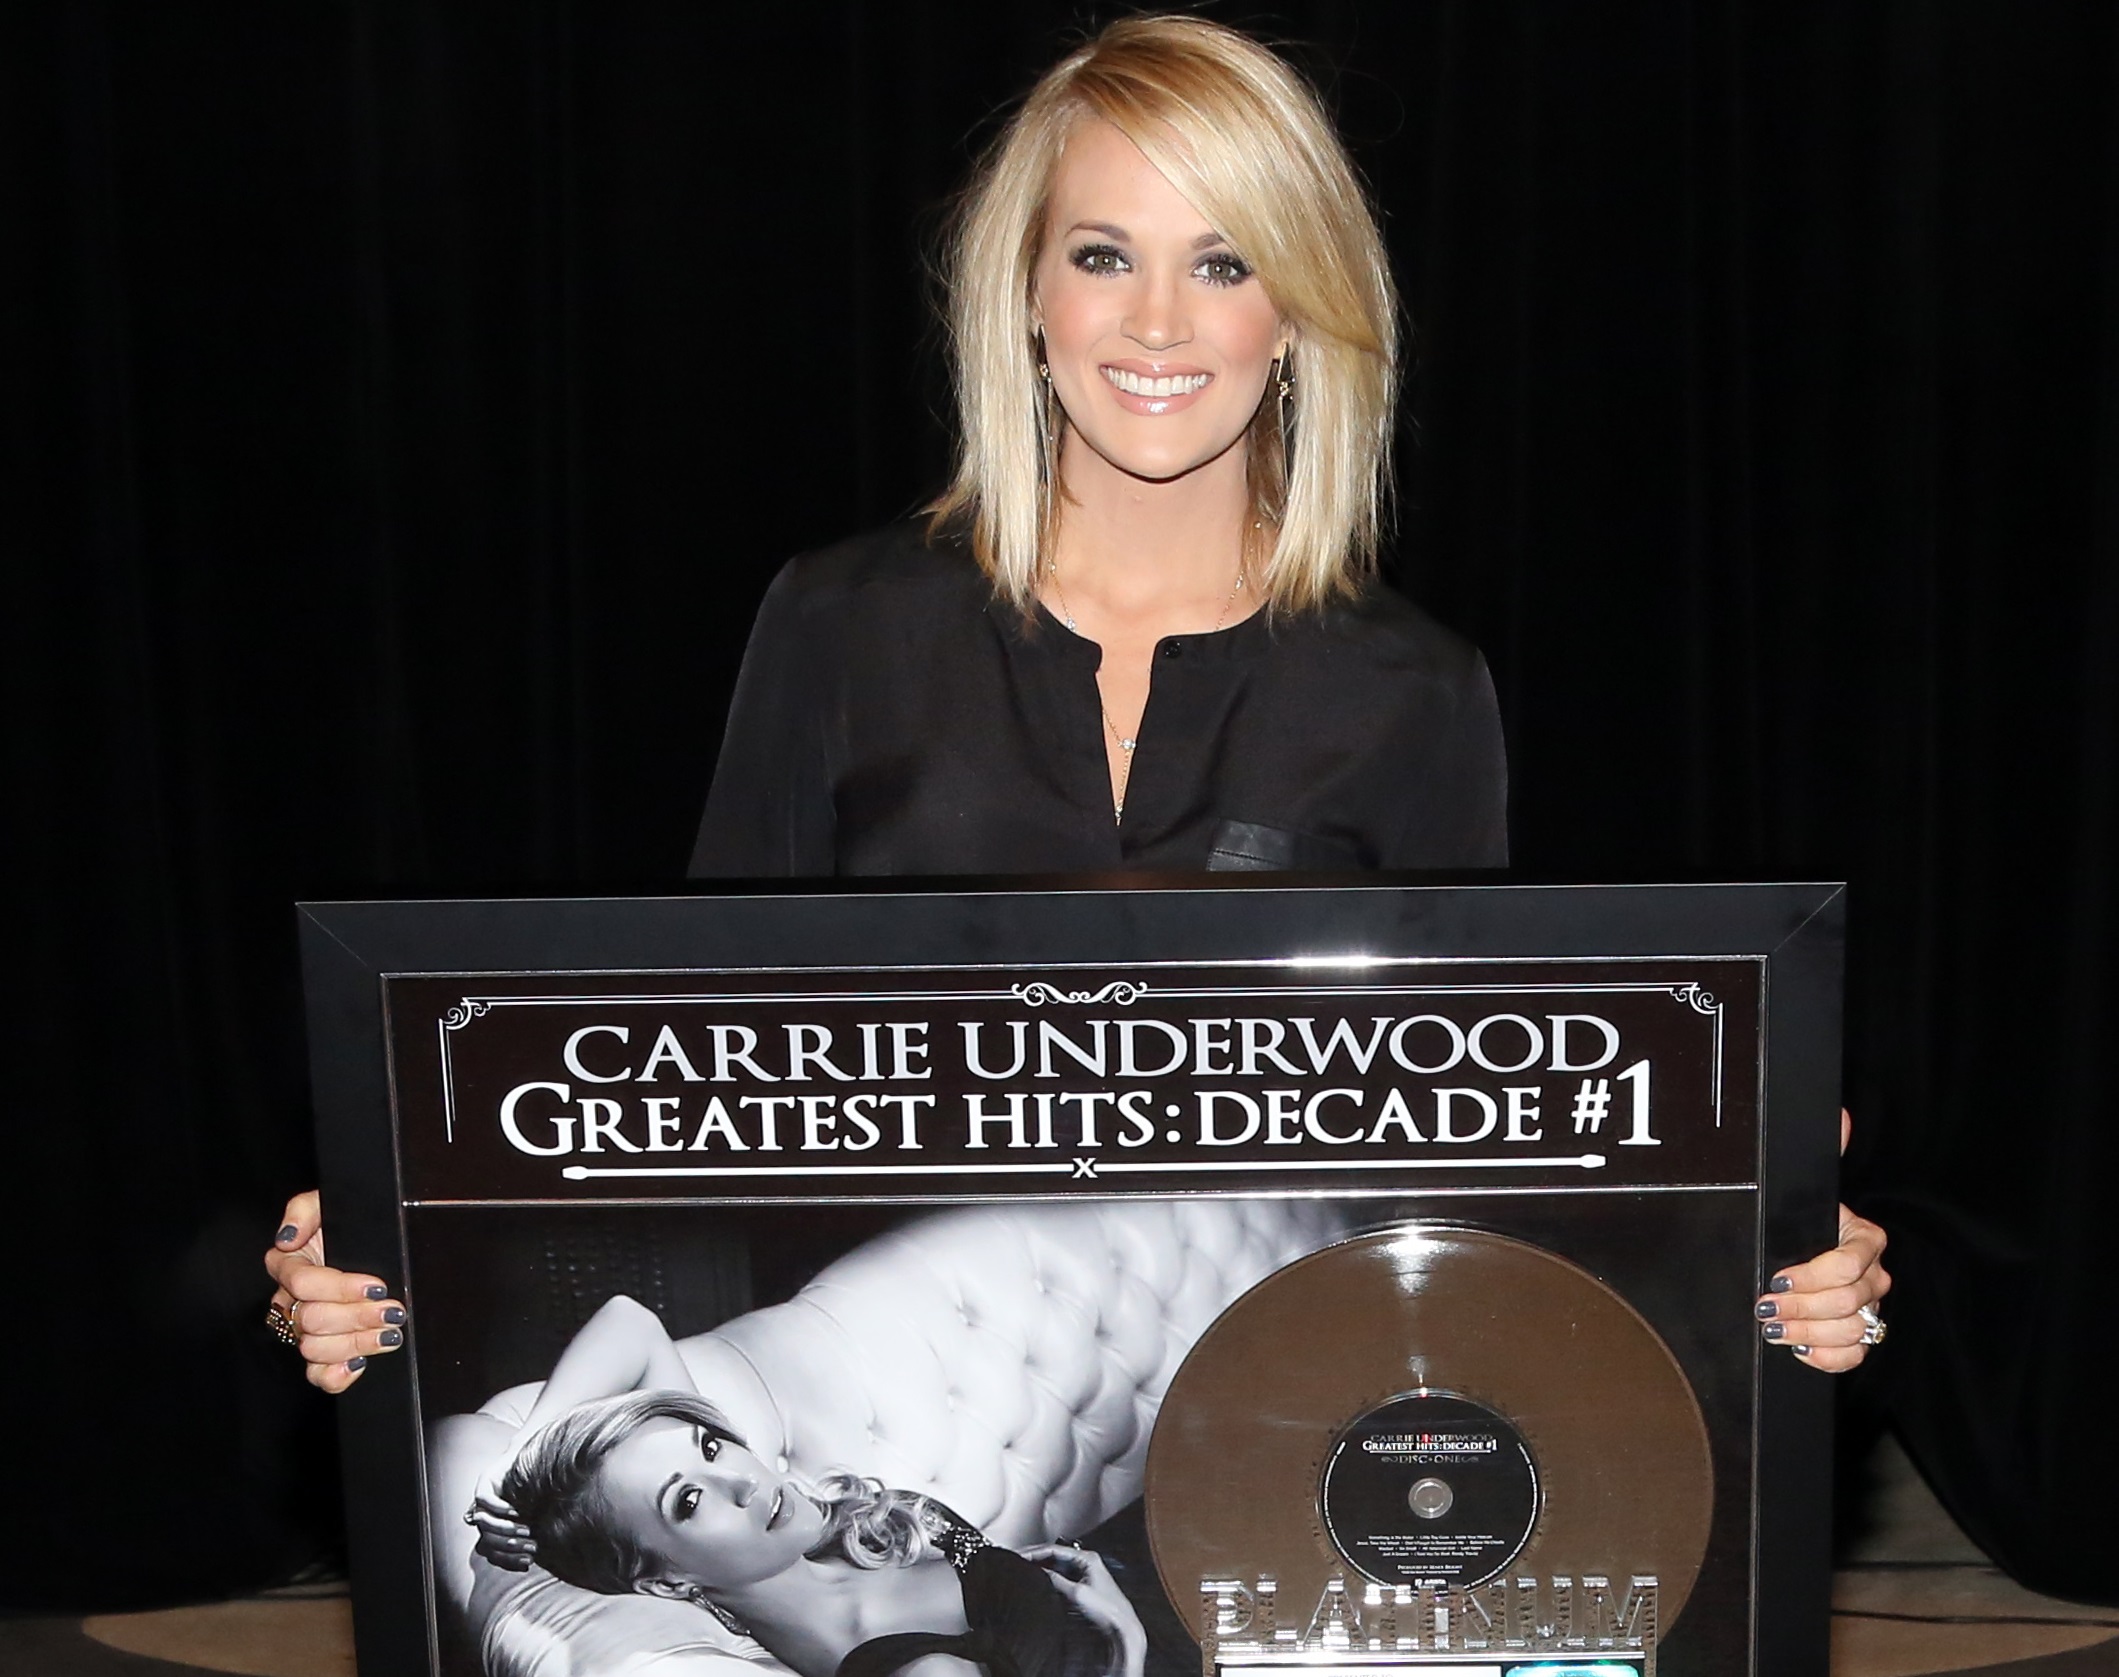 Carrie underwood greatest hits torrents old school ski film torrent